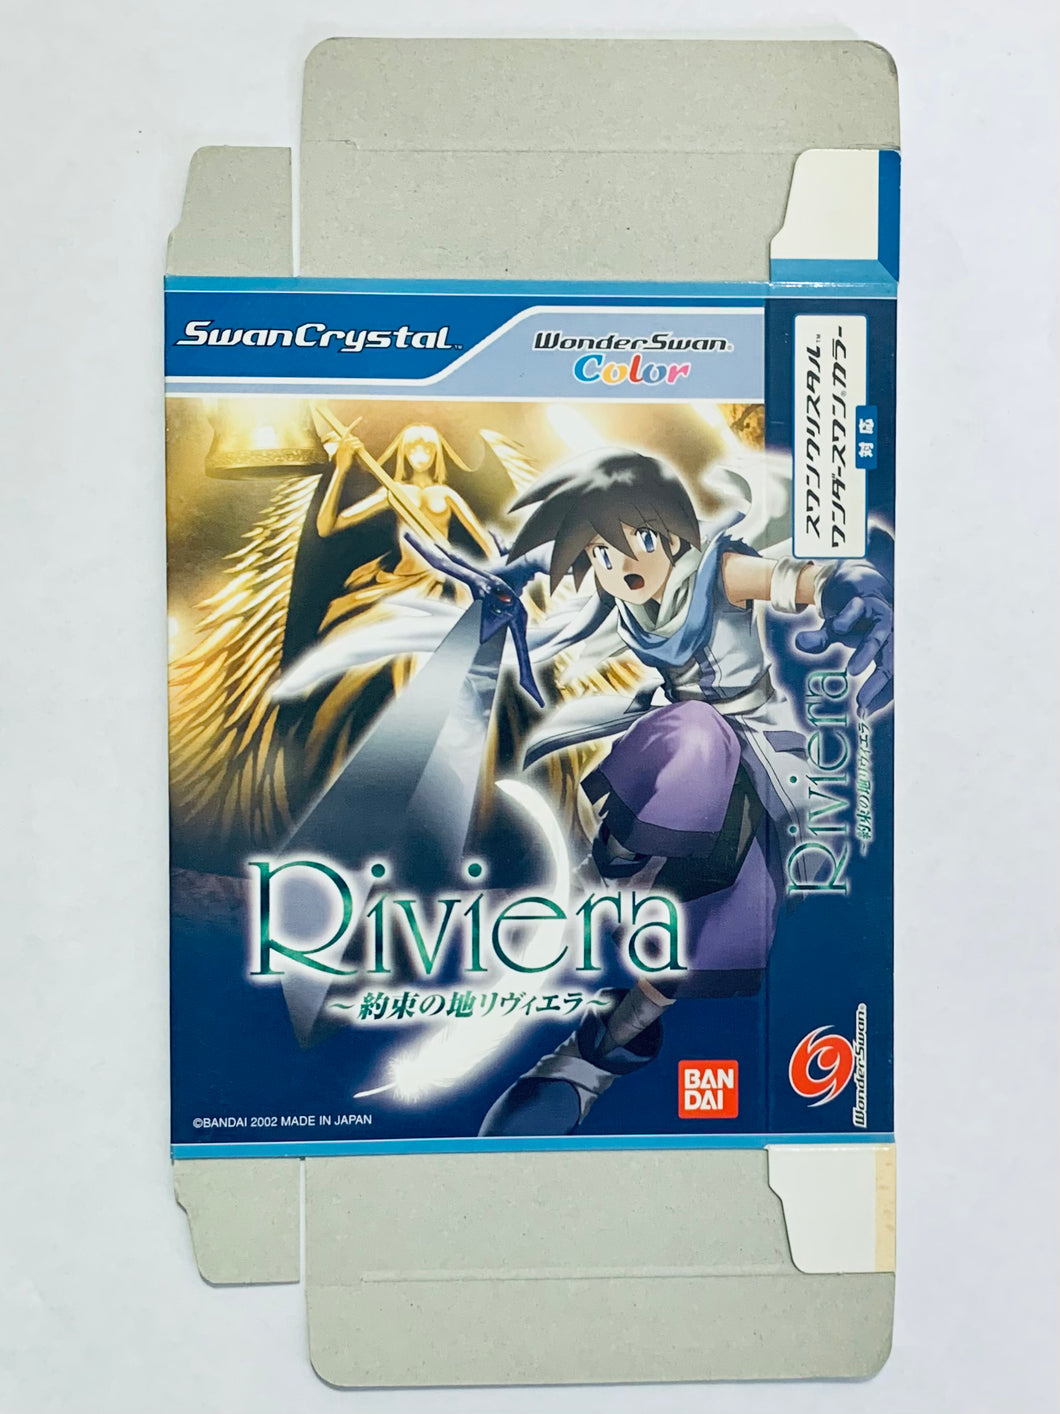 Riviera: Yakusoku no Chi Riviera - WonderSwan Color - WSC - JP - Box Only (SWJ-BANC27)